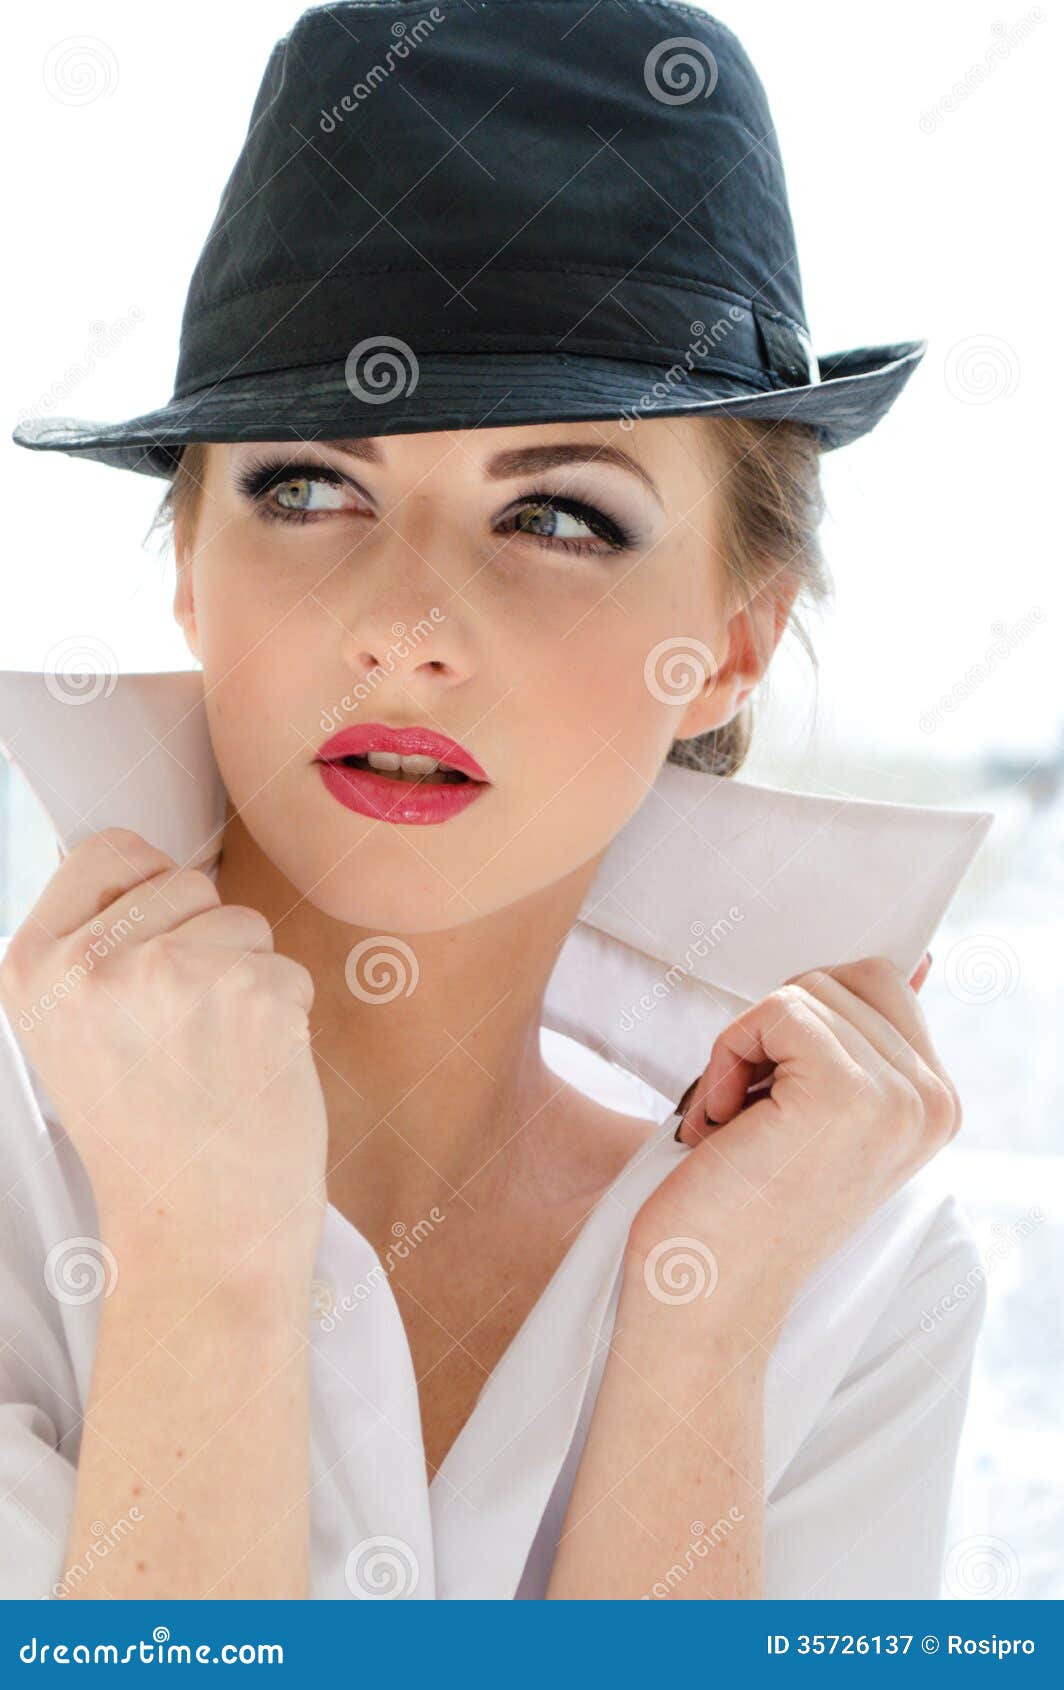 headshot-young-business-woman-wearing-man-s-shirt-hat-looking-bossy-stylish-office-white-background-35726137.jpg